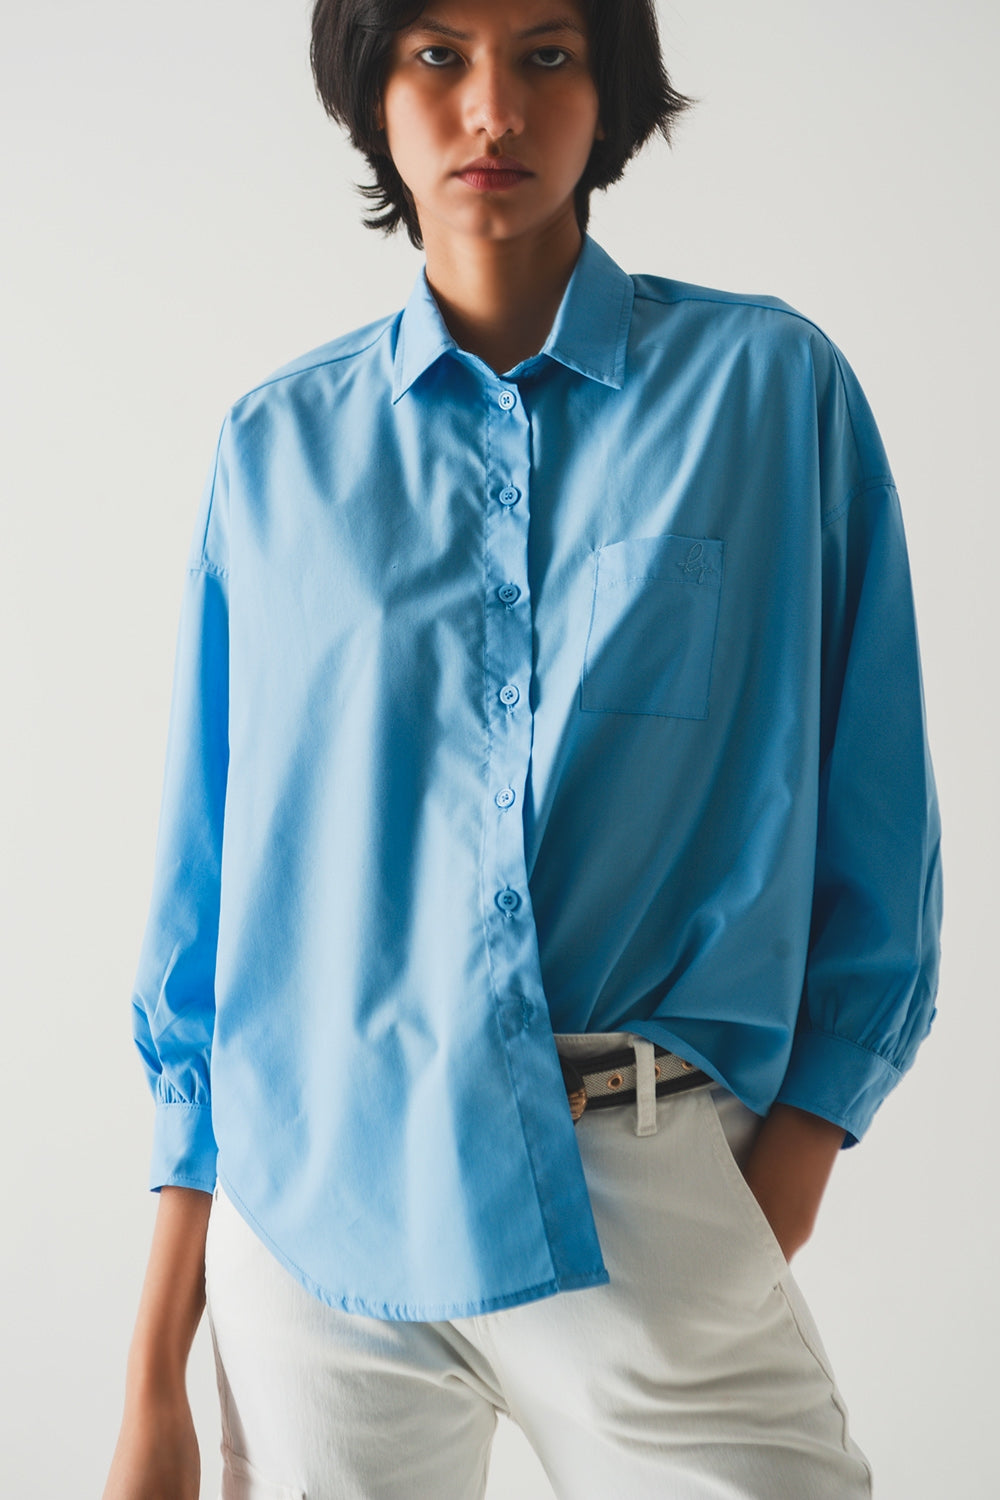 volume sleeve poplin shirt in blue - Szua Store